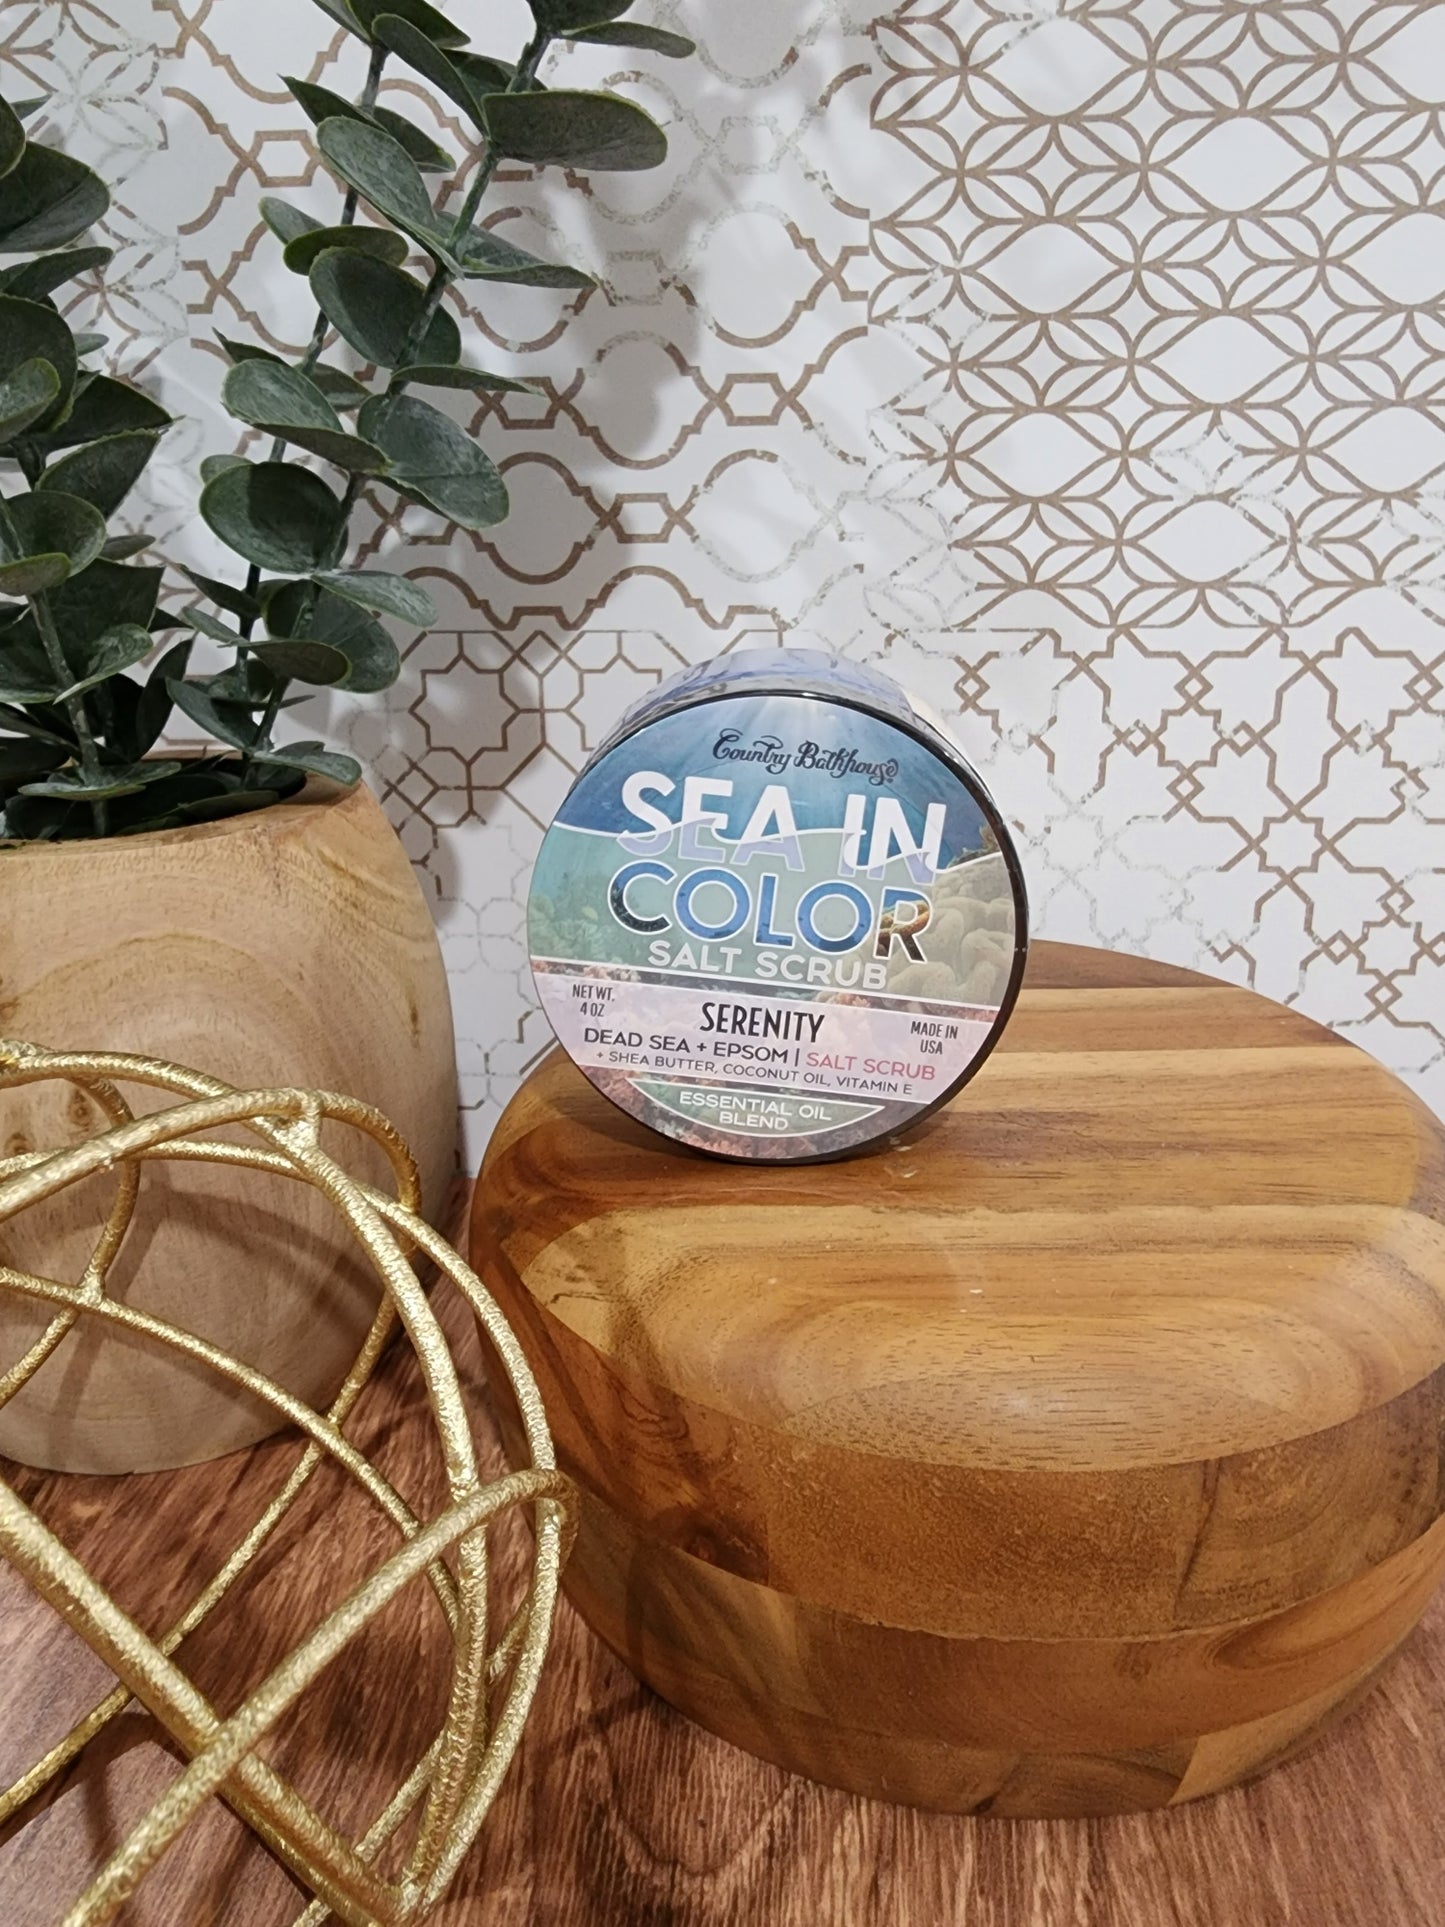 Sea In Color Salt Scrub - Serenity